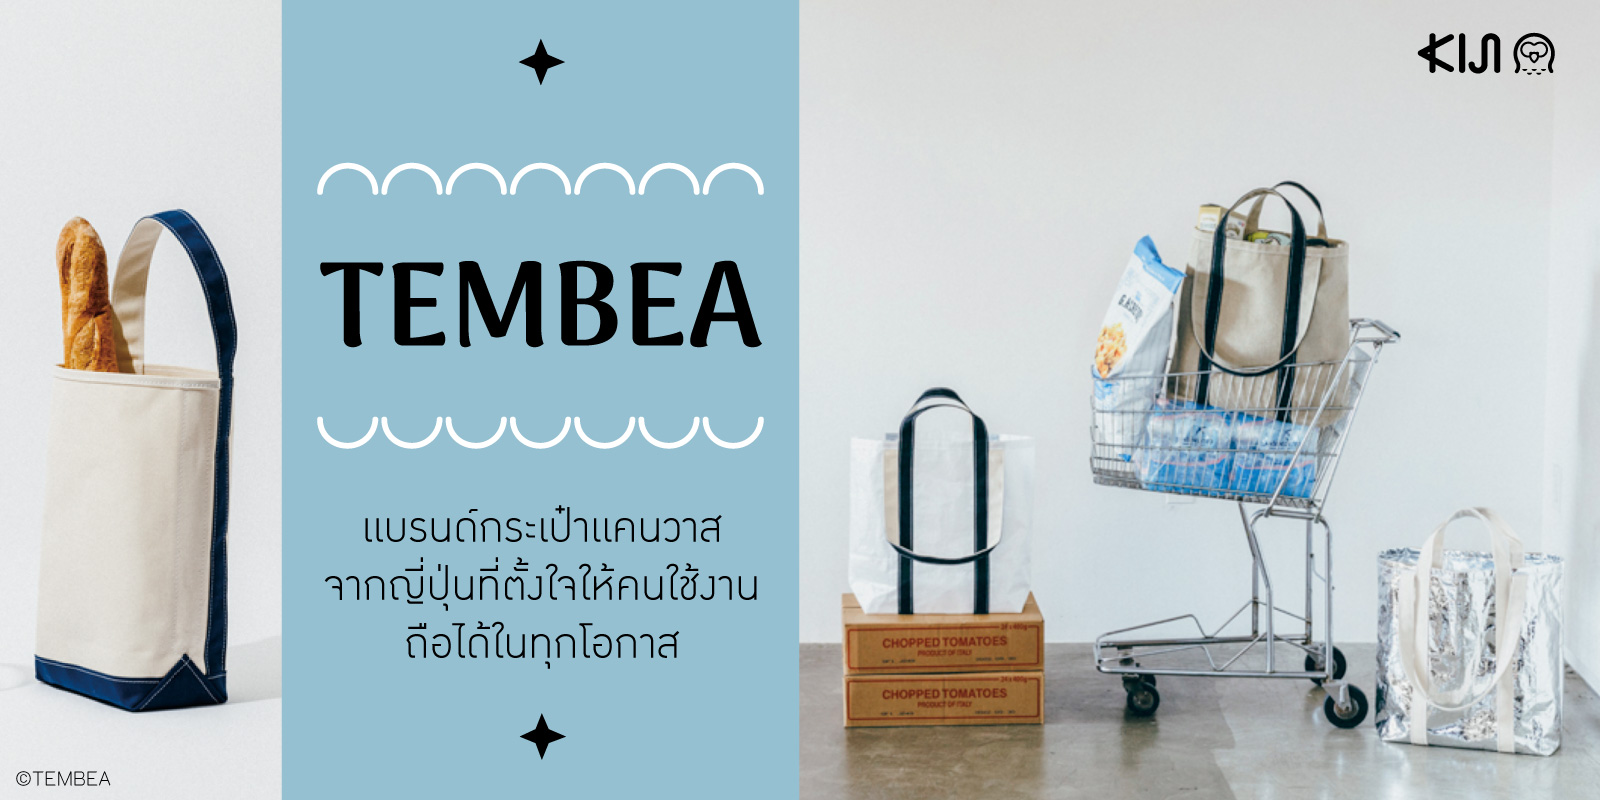 TEMBEA กระเป๋าแคนวาสจากญี่ปุ่นที่ใช้ได้ทุกโอกาส